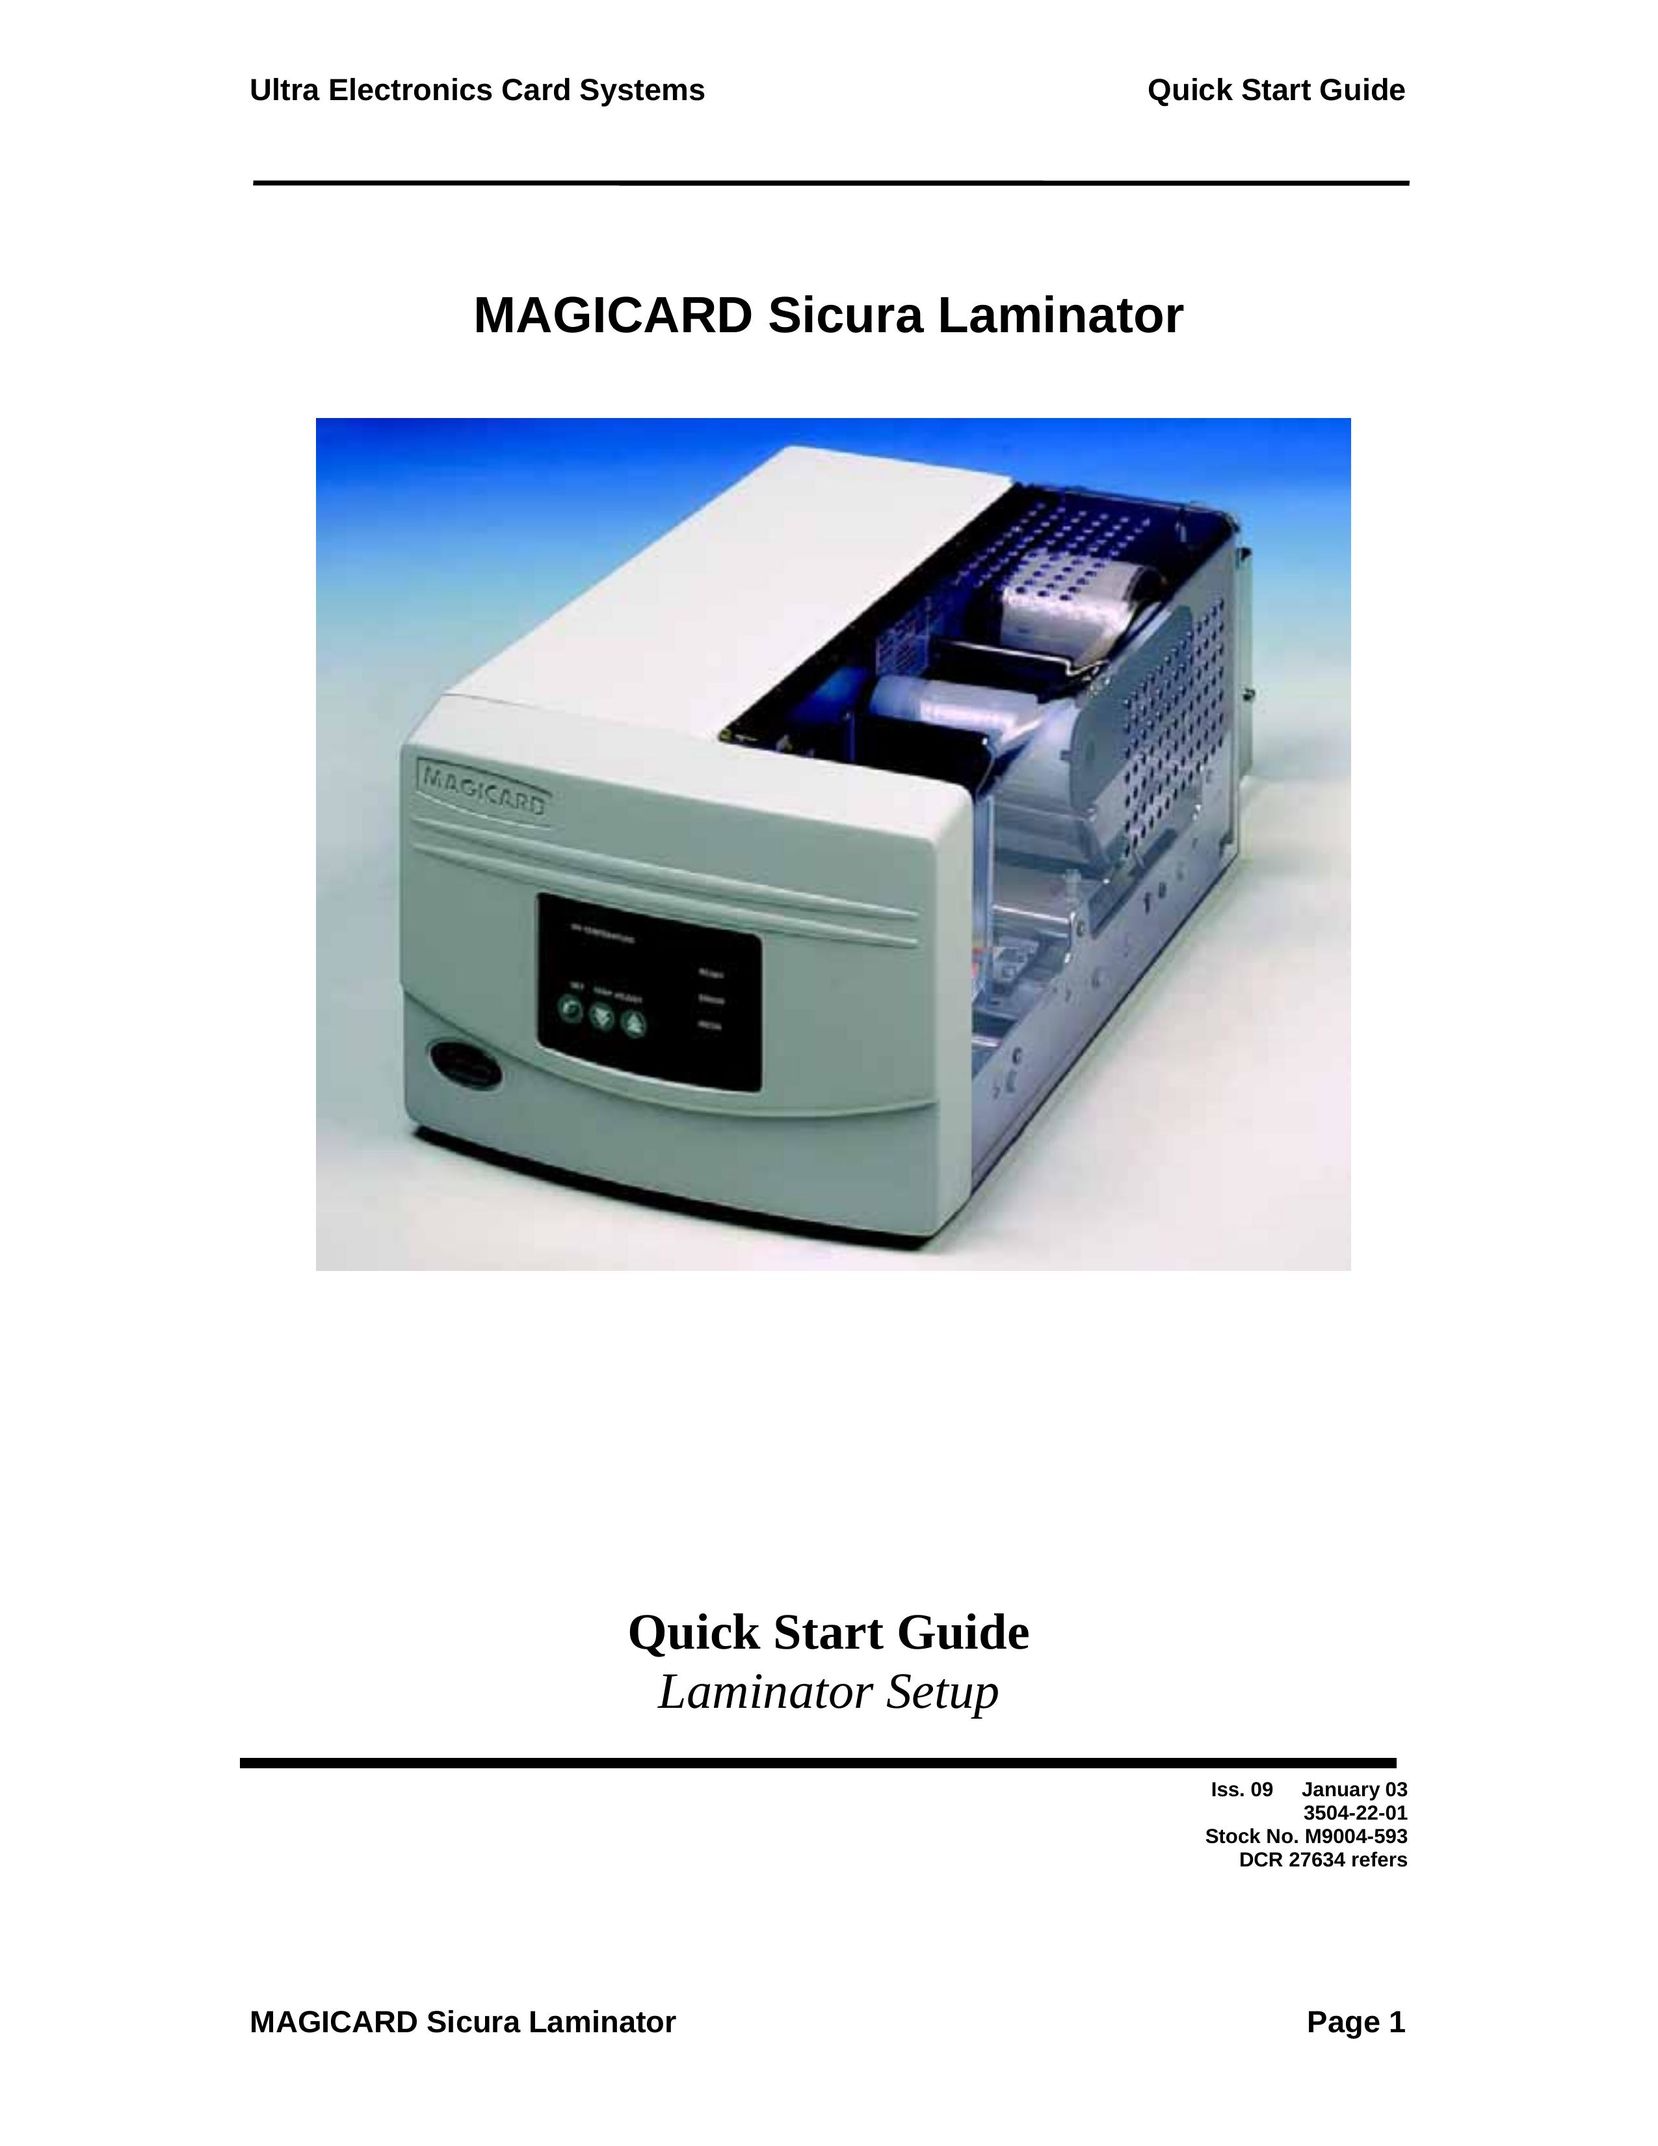 Ultra electronic Sicura Laminator Laminator User Manual